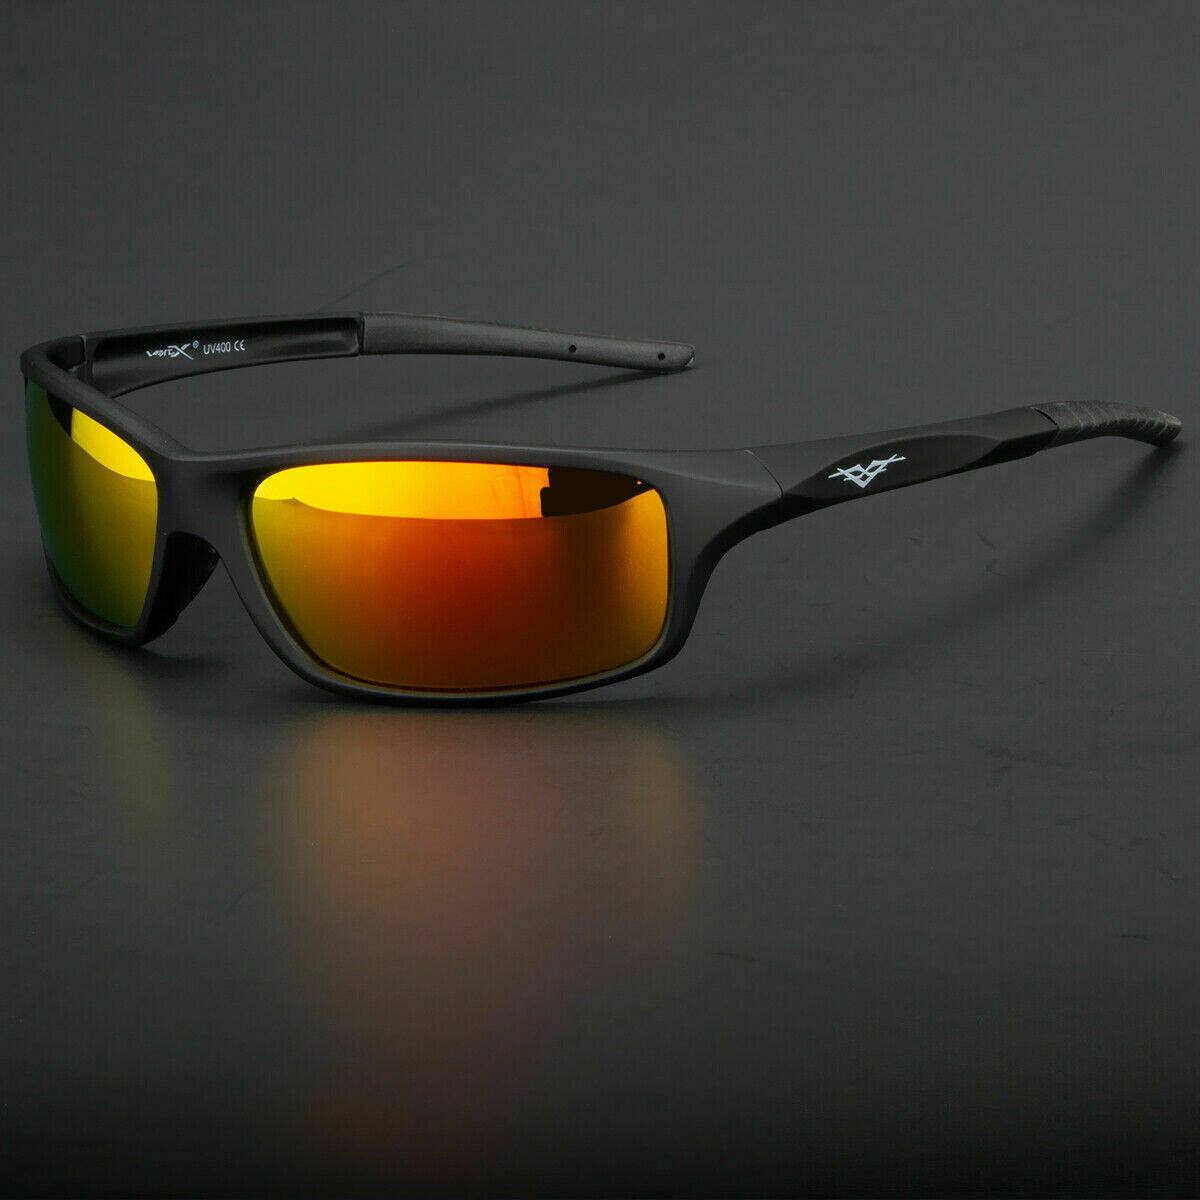 ::NEW Polarized Men Sport Sunglasses Driving Pilot Fishing Eyewear Wrap Glasses US